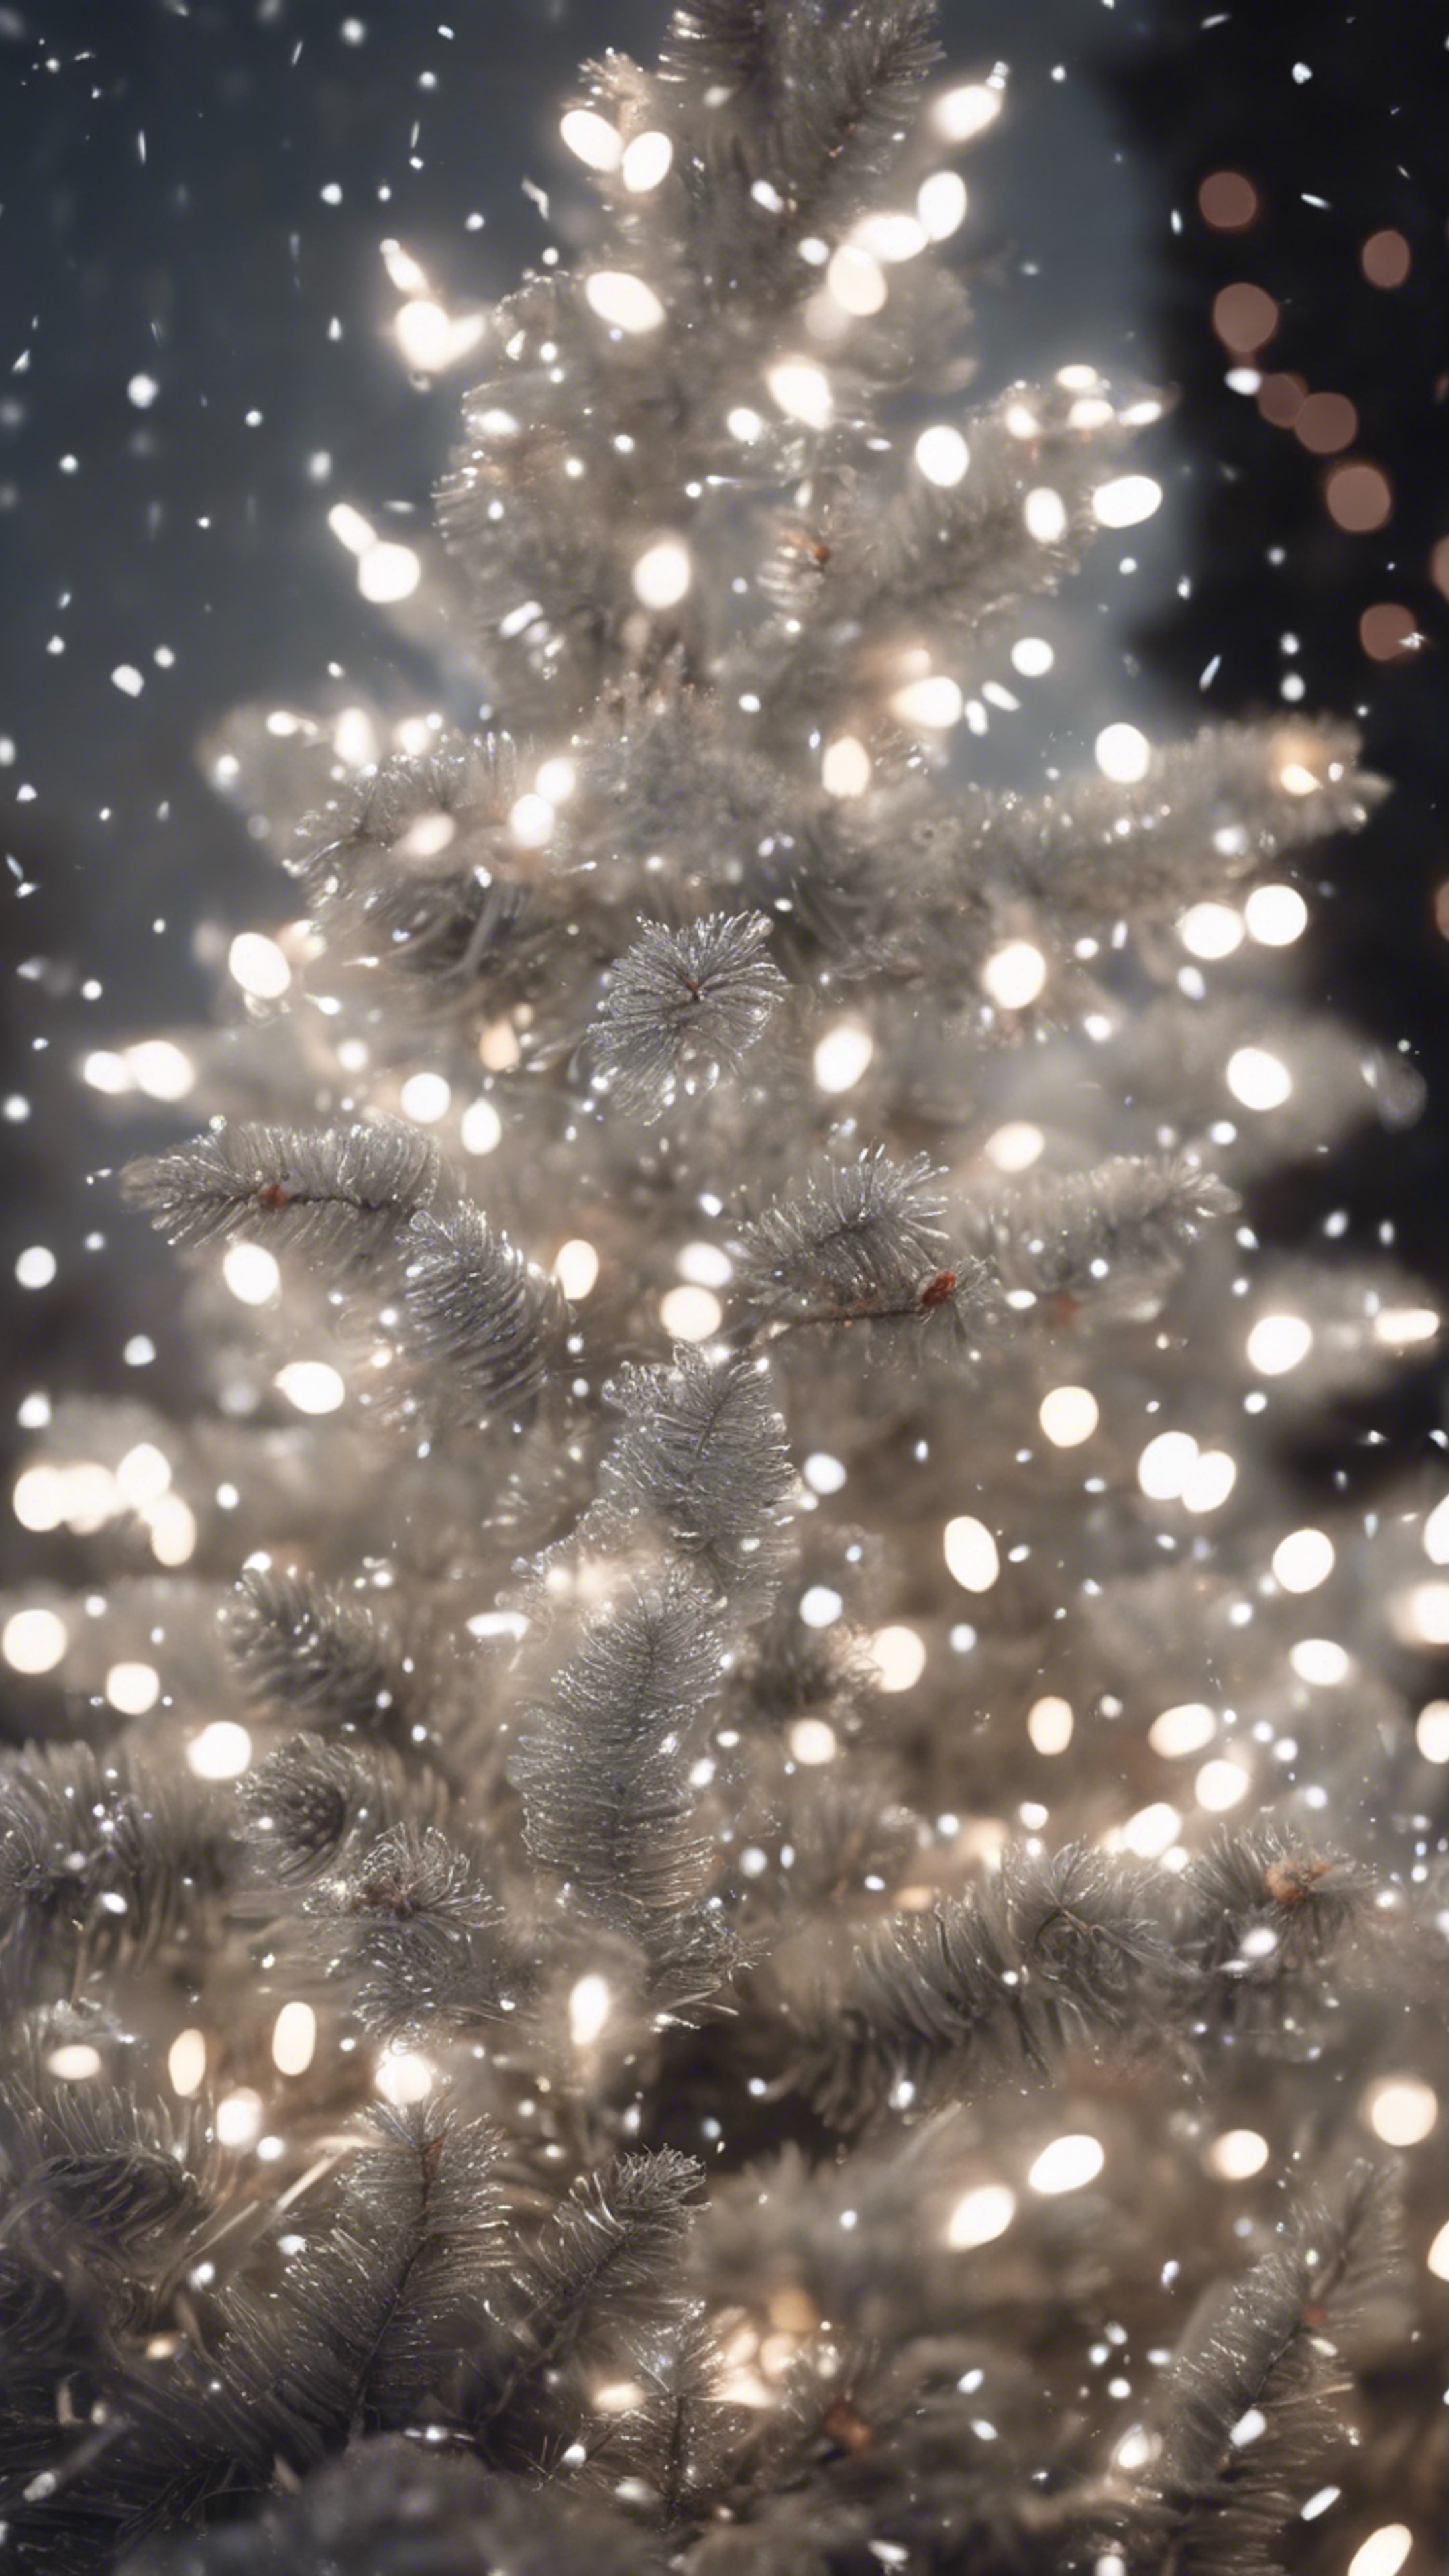 White Christmas lights shimmering on a silver spruce tree, with delicate snowflakes falling around. duvar kağıdı[aebc3baa8421448a9f7c]